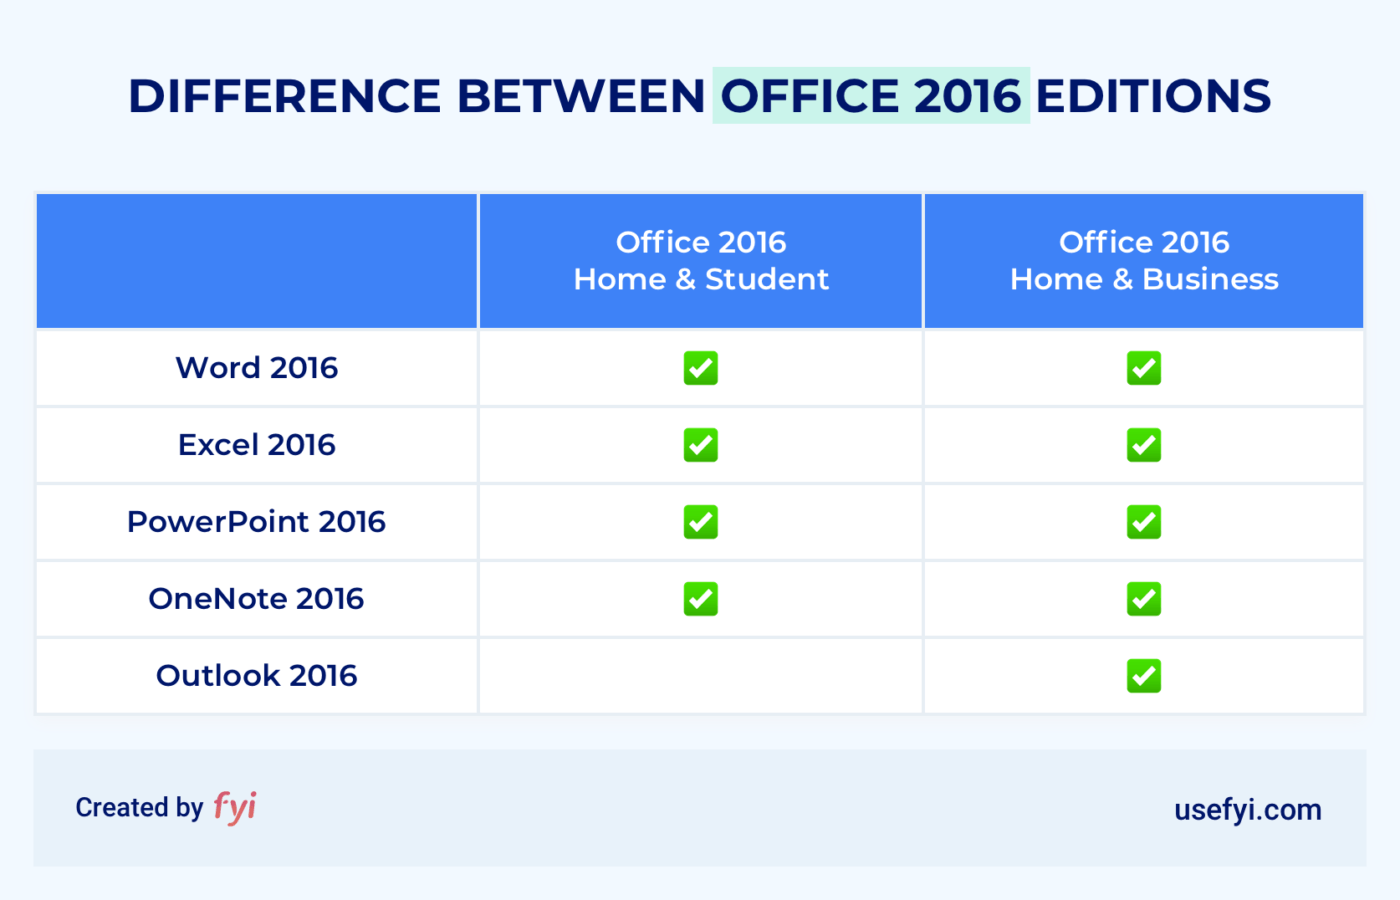 office 365 vs office 2016